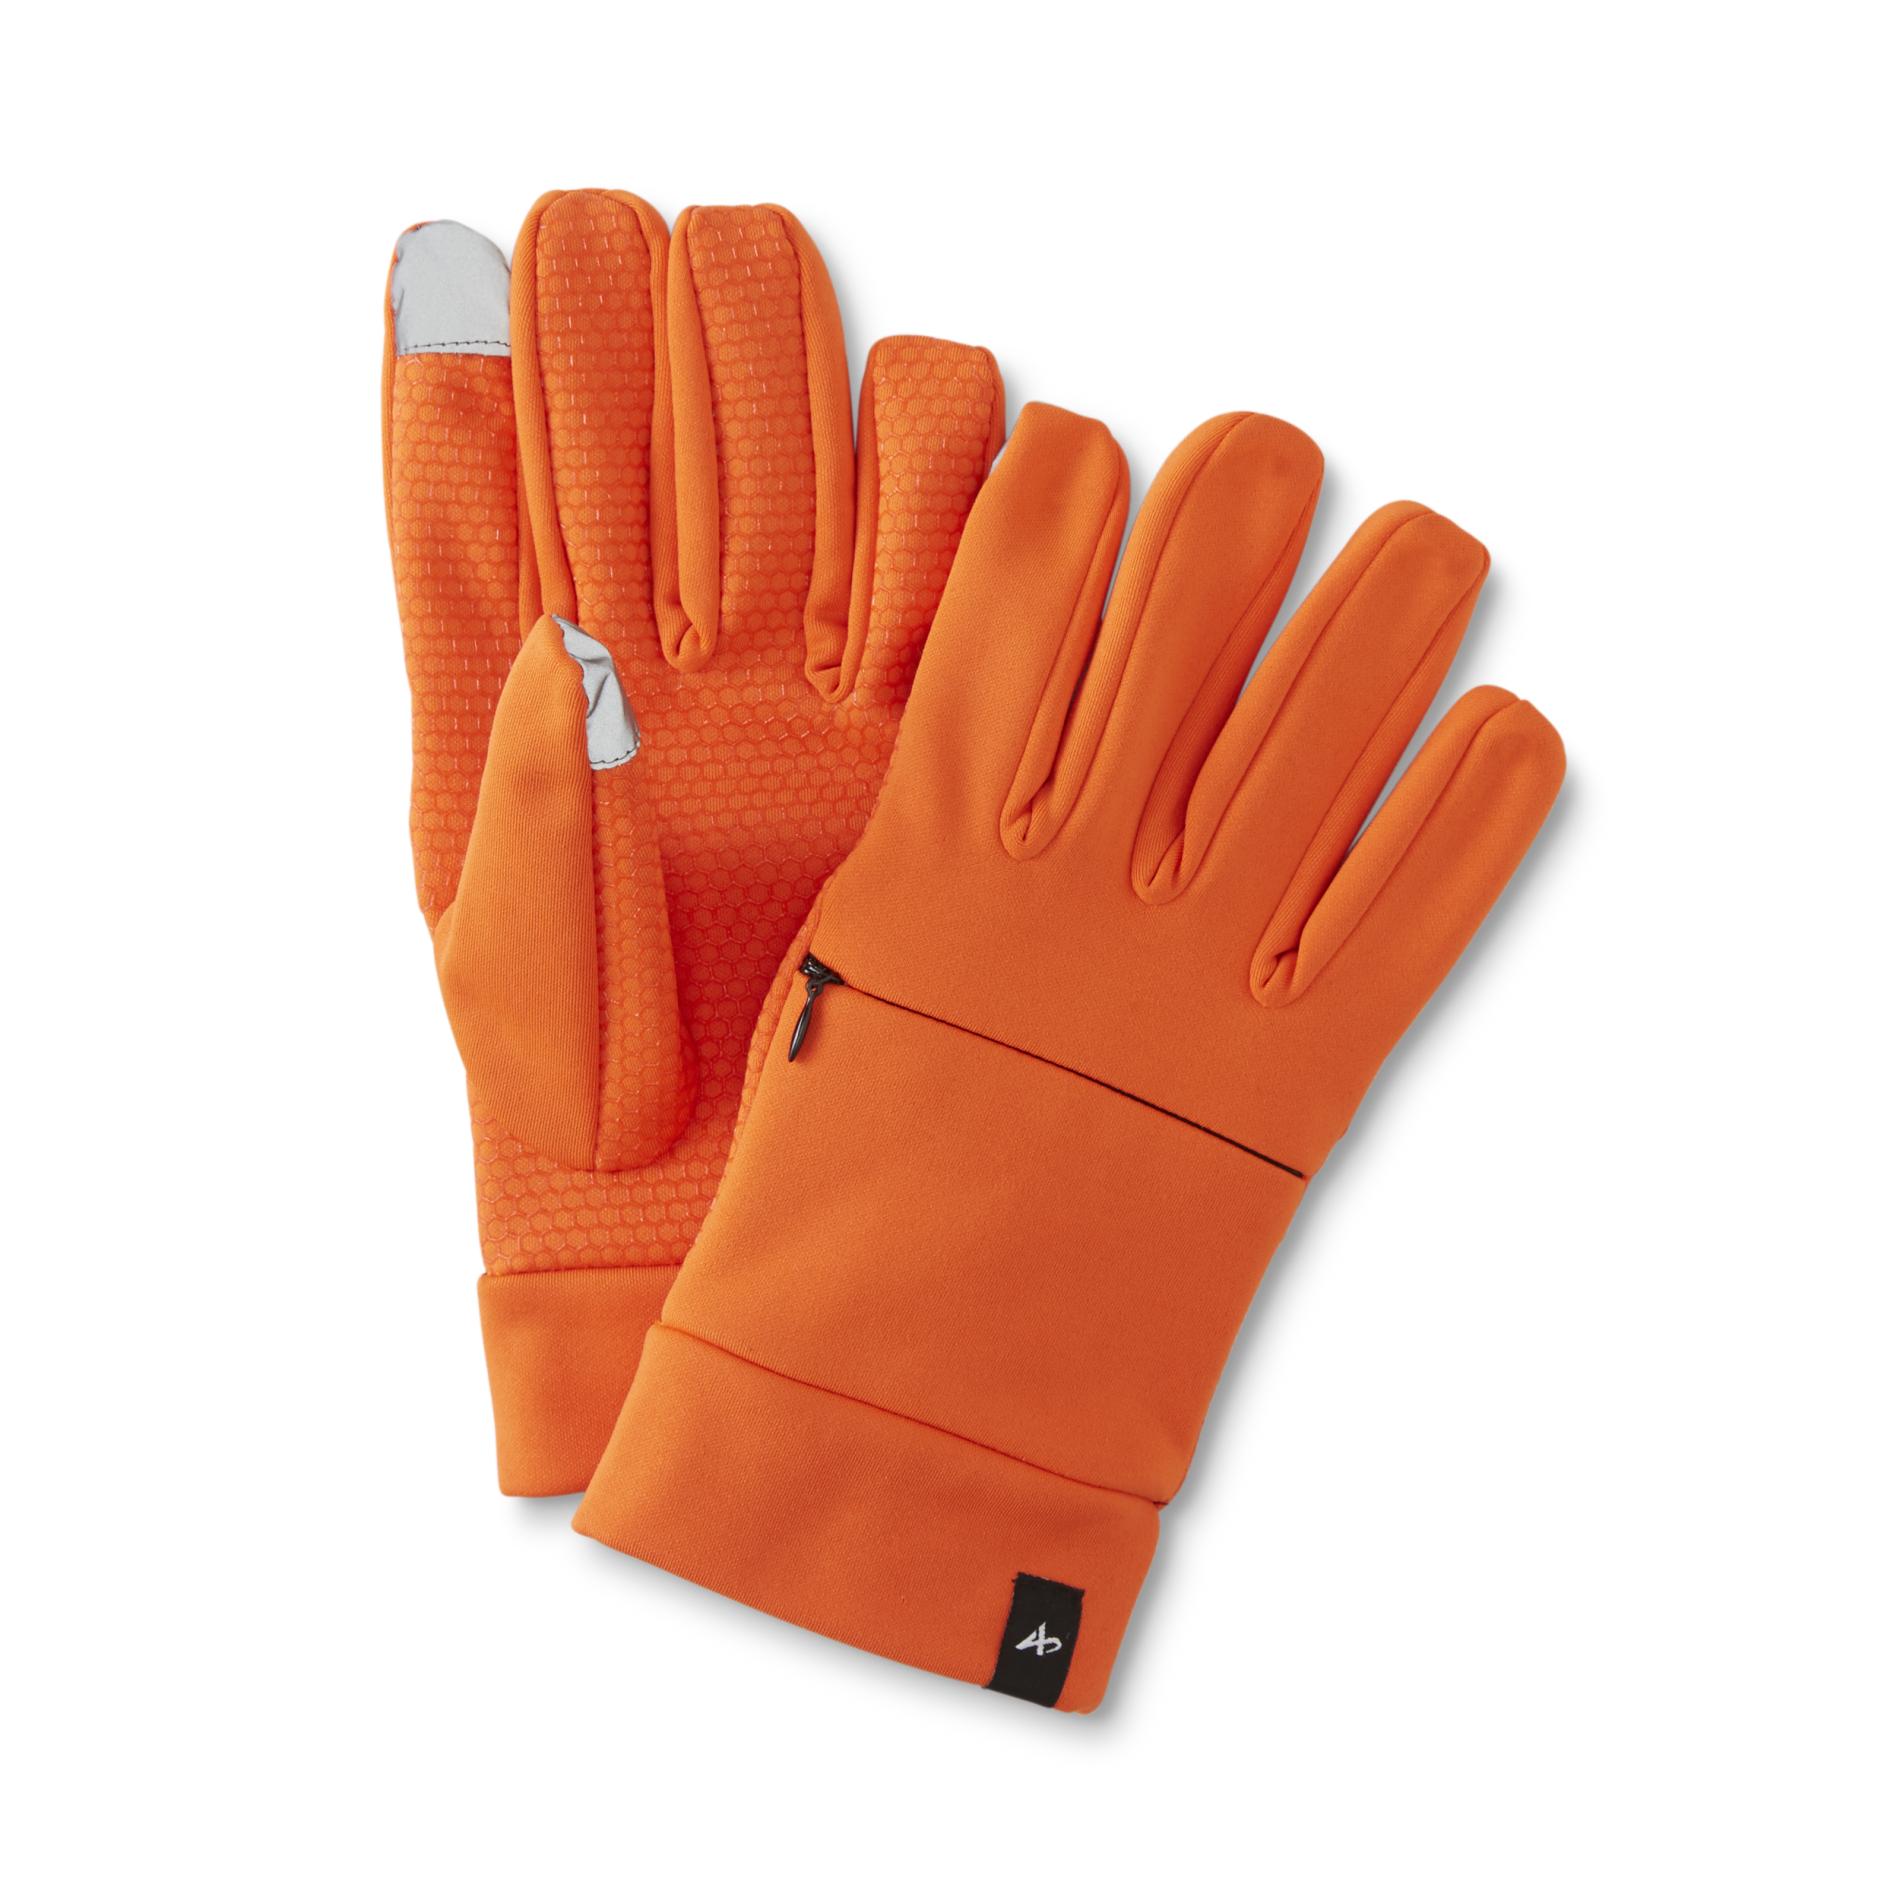 Athletech Men's Touch Tech Gloves